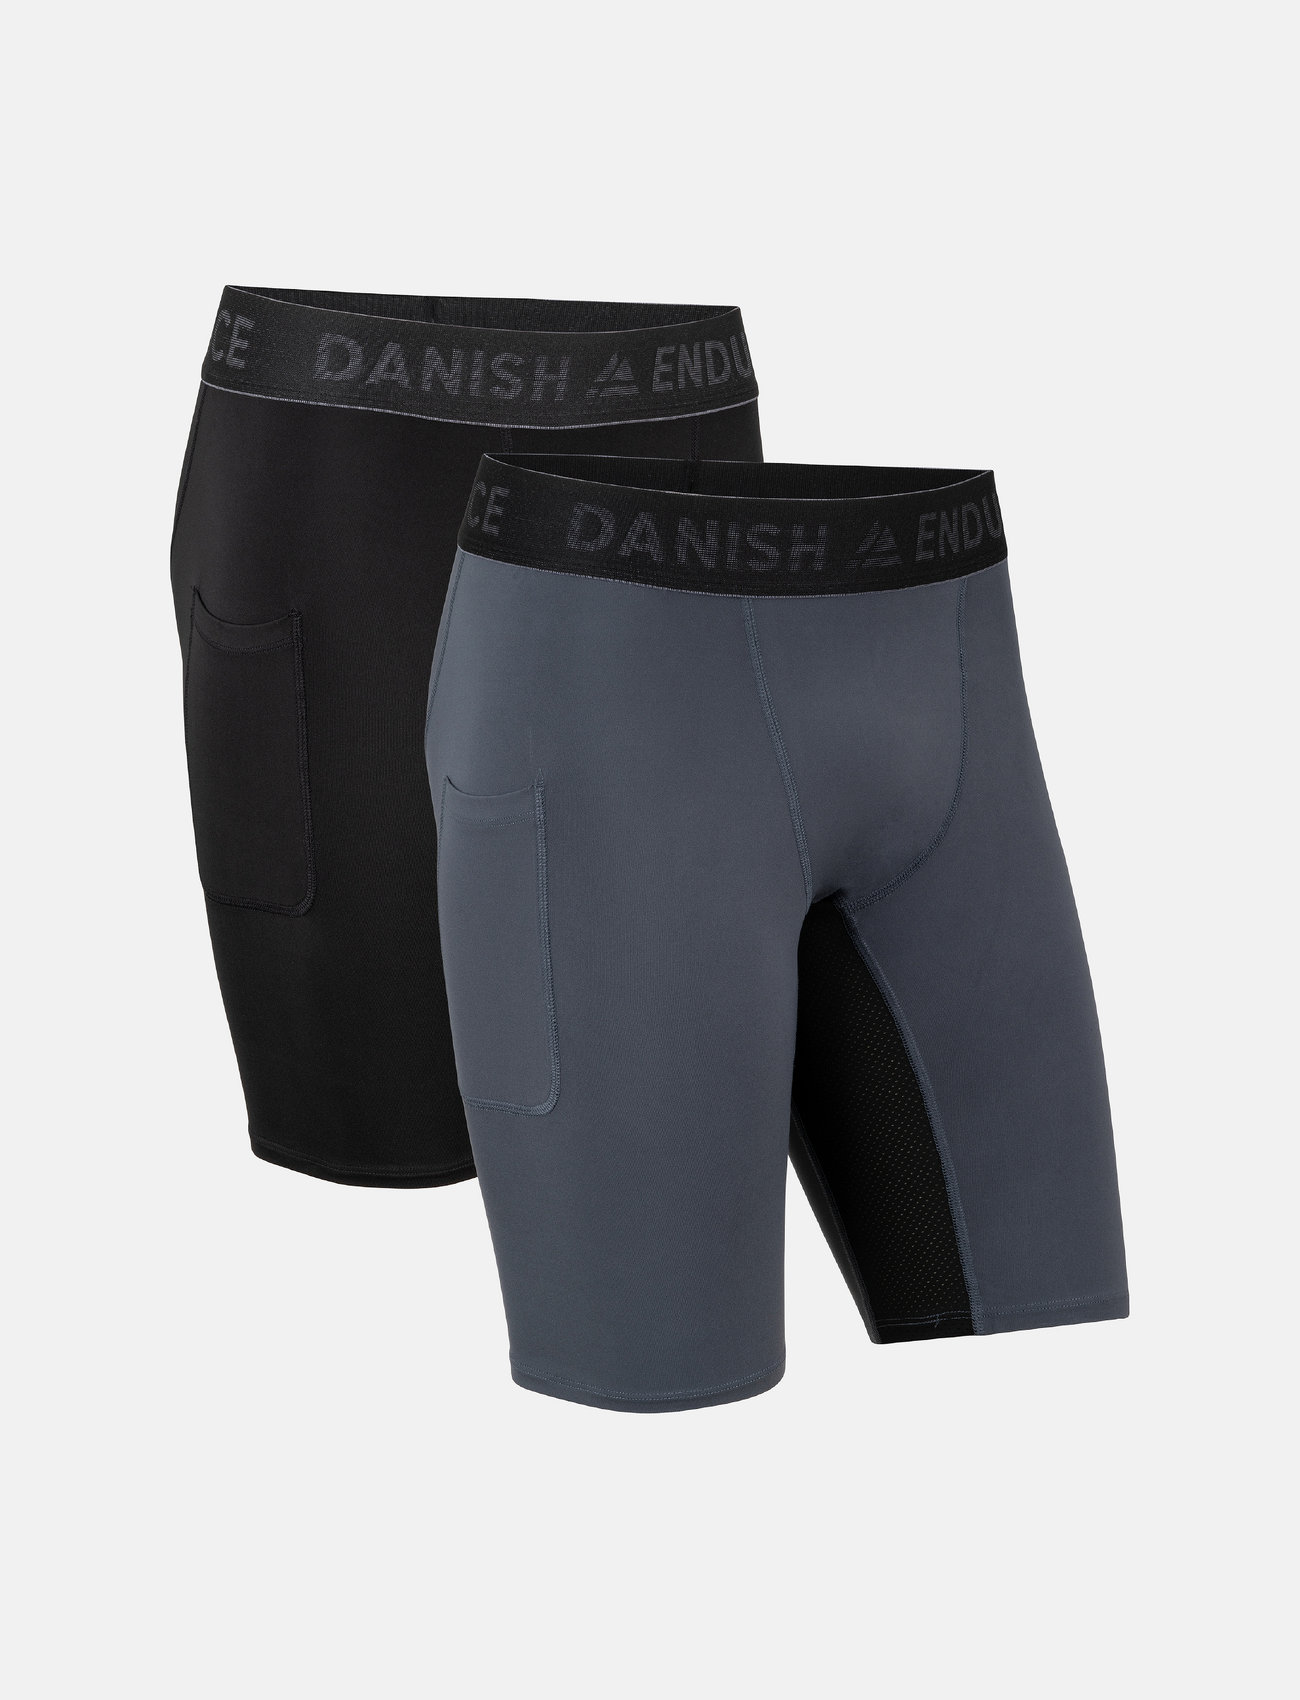 Danish Endurance - Men's Compression Shorts 2-pack - lowest prices - multicolor (1x black, 1x grey) - 0